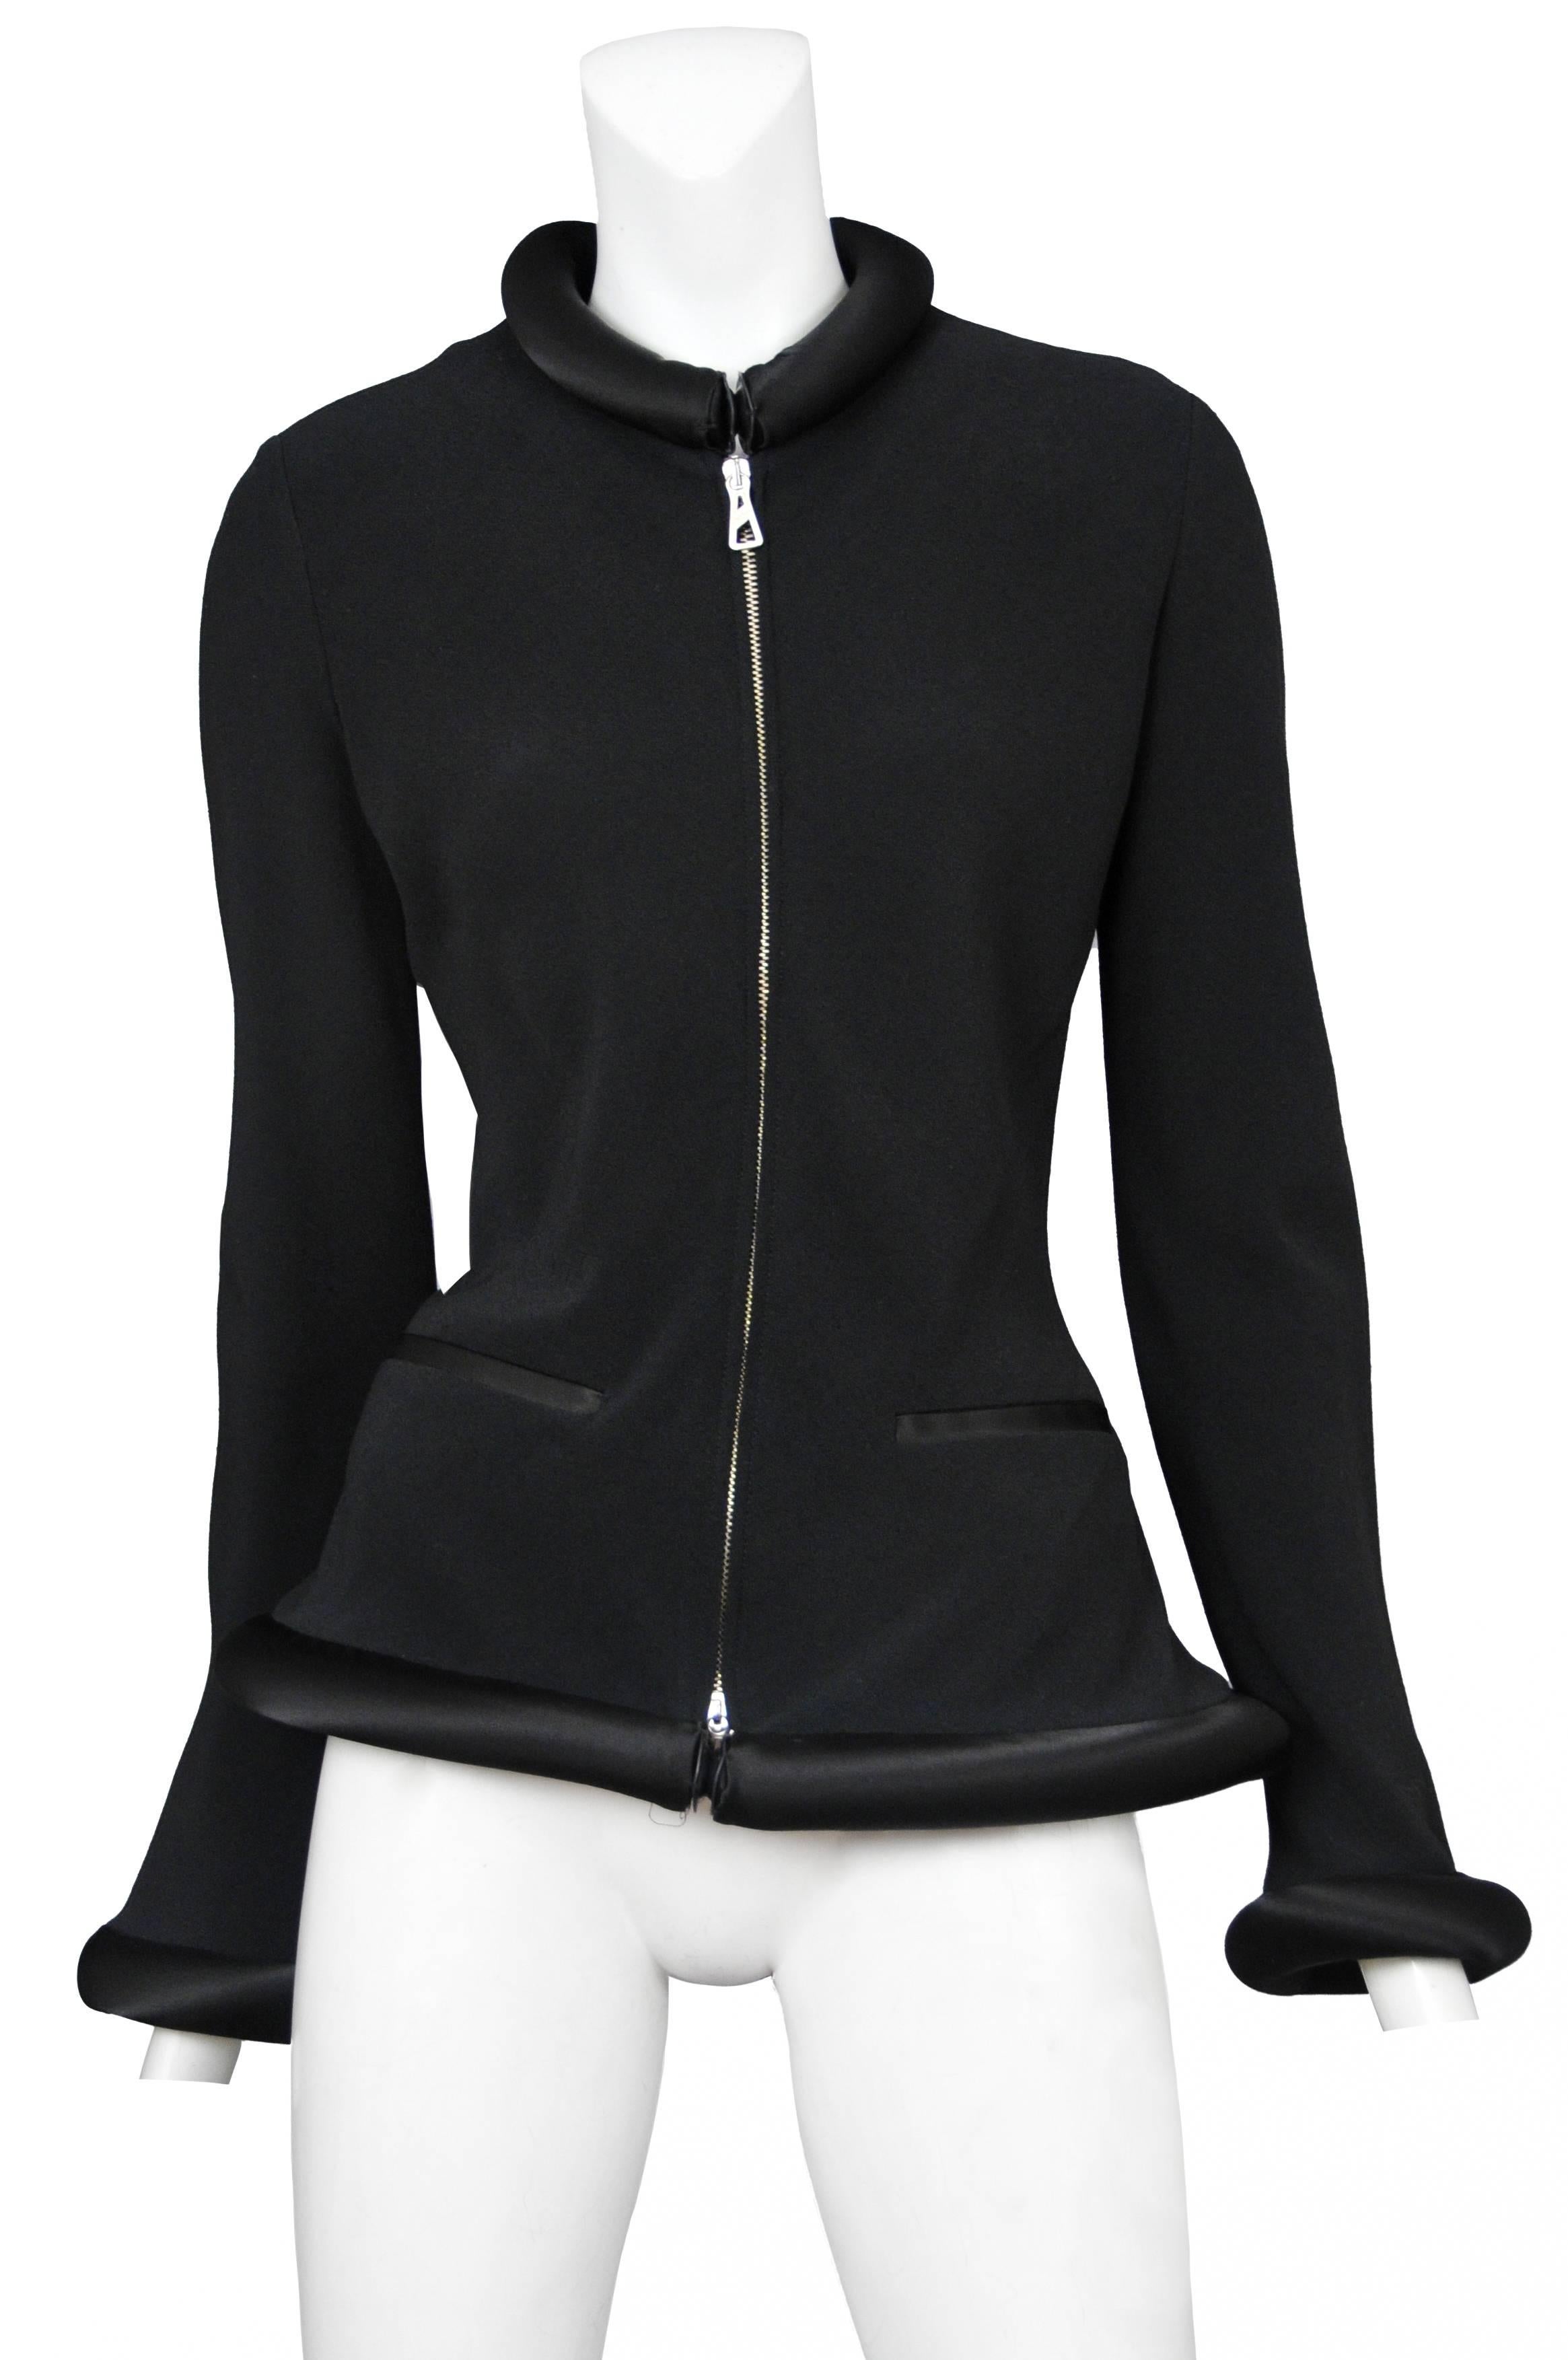 Vintage Jean Paul Gaultier black zipper front jacket featuring black satin tubing around the collar, cuffs and hem.
